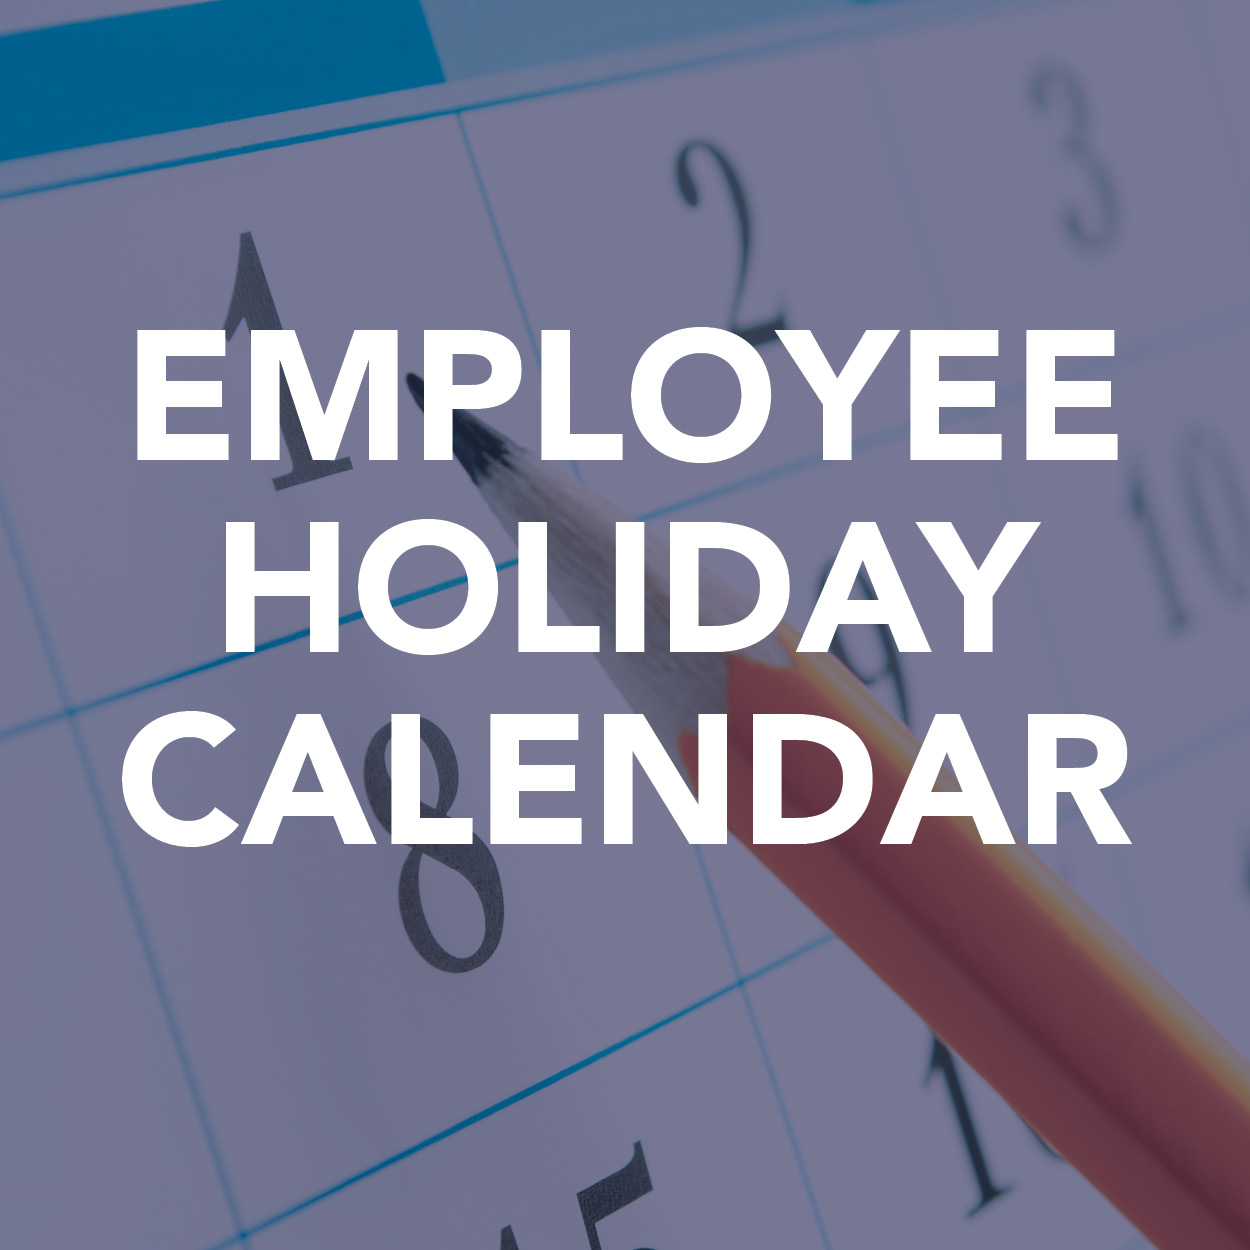 Staff Holiday Calendar Central Carolina Technical College